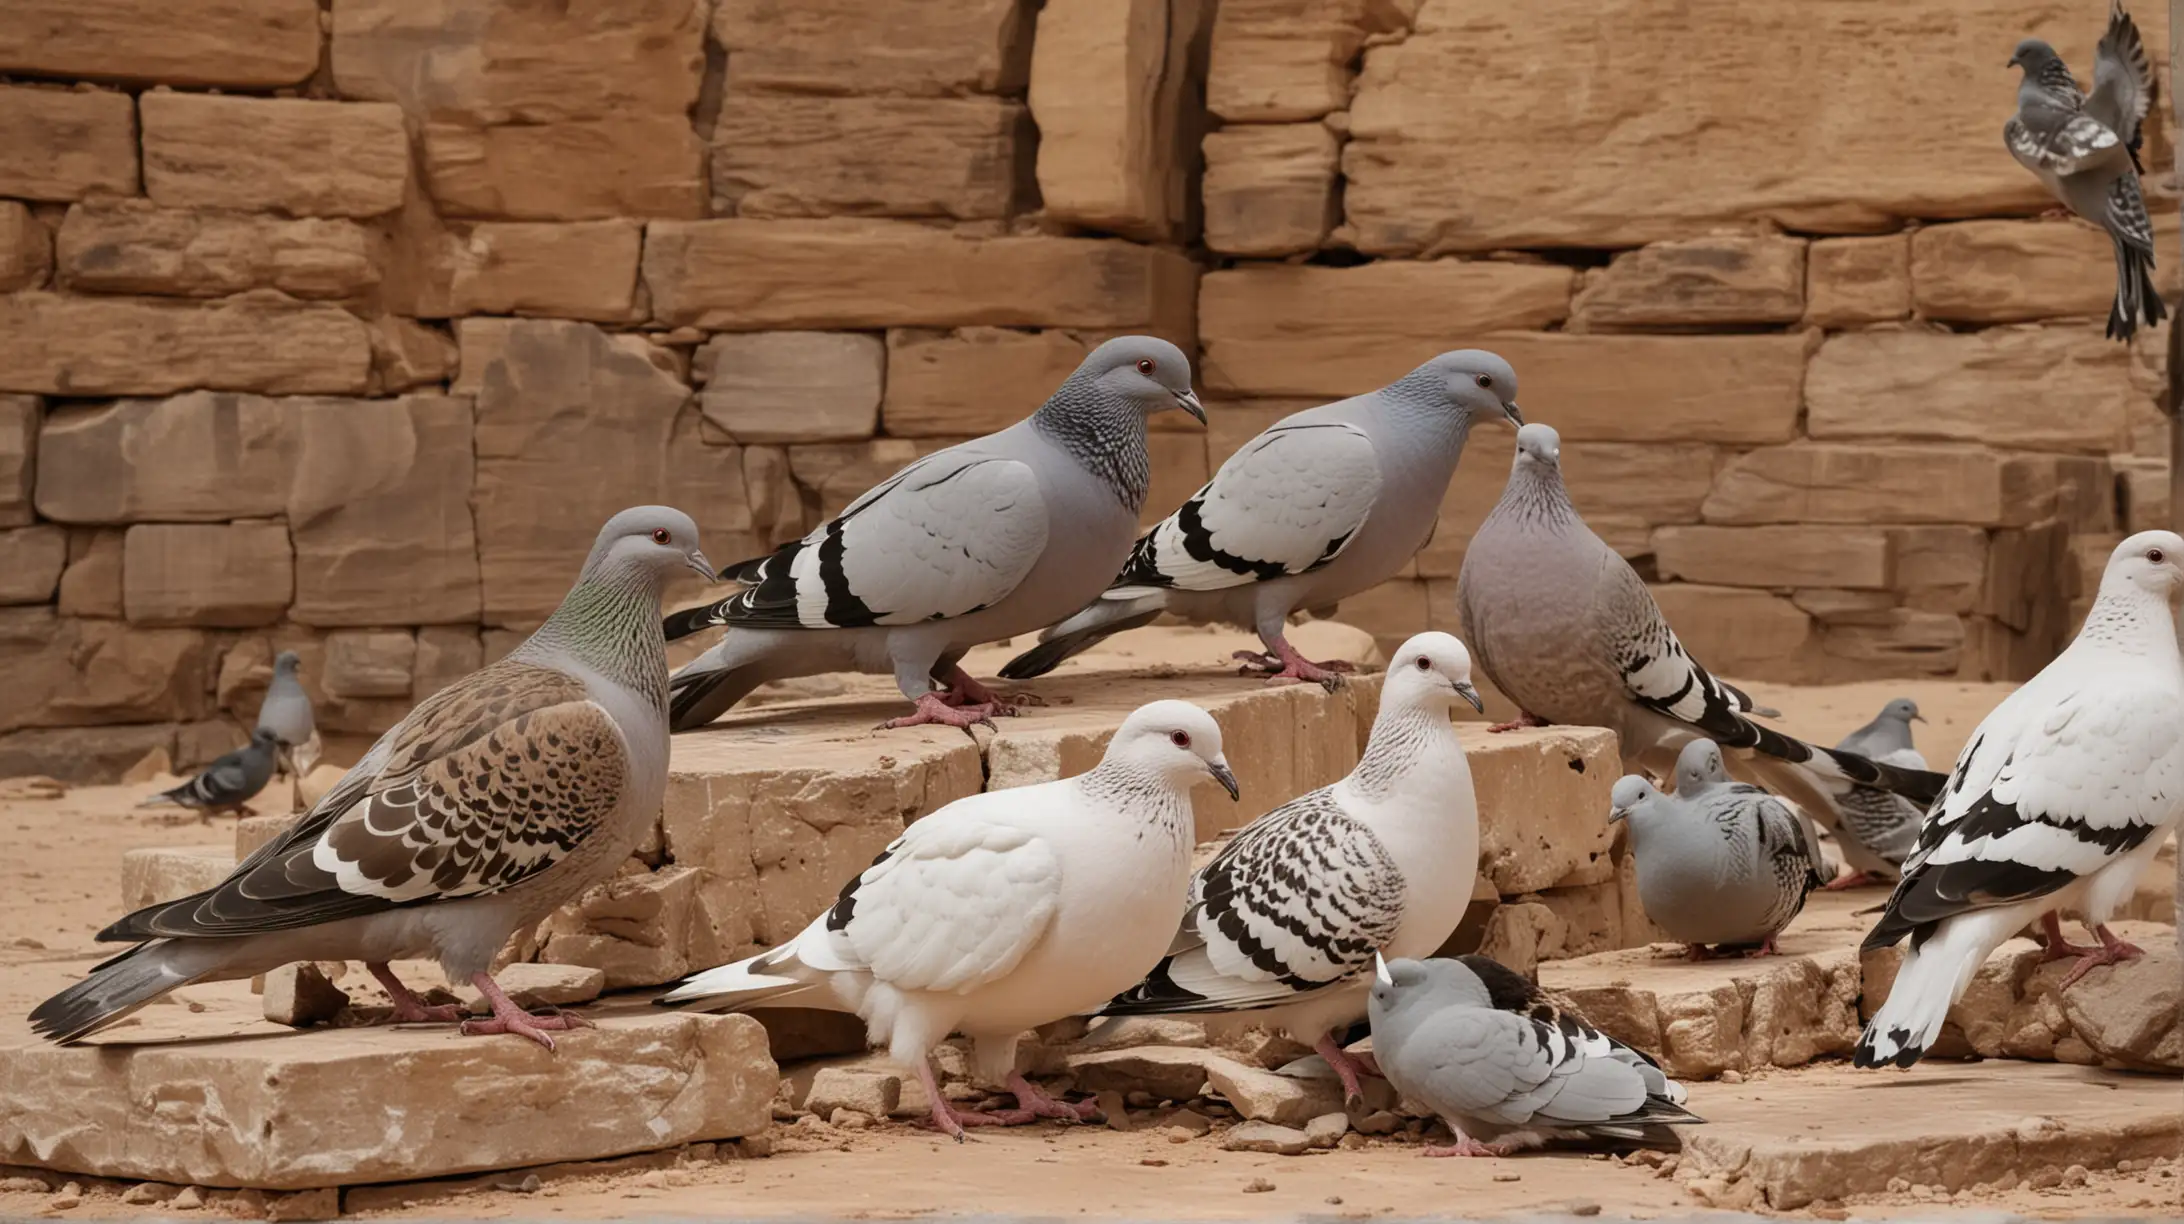 Desert Birds Gathering at Stone Altar in Biblical Moses Era